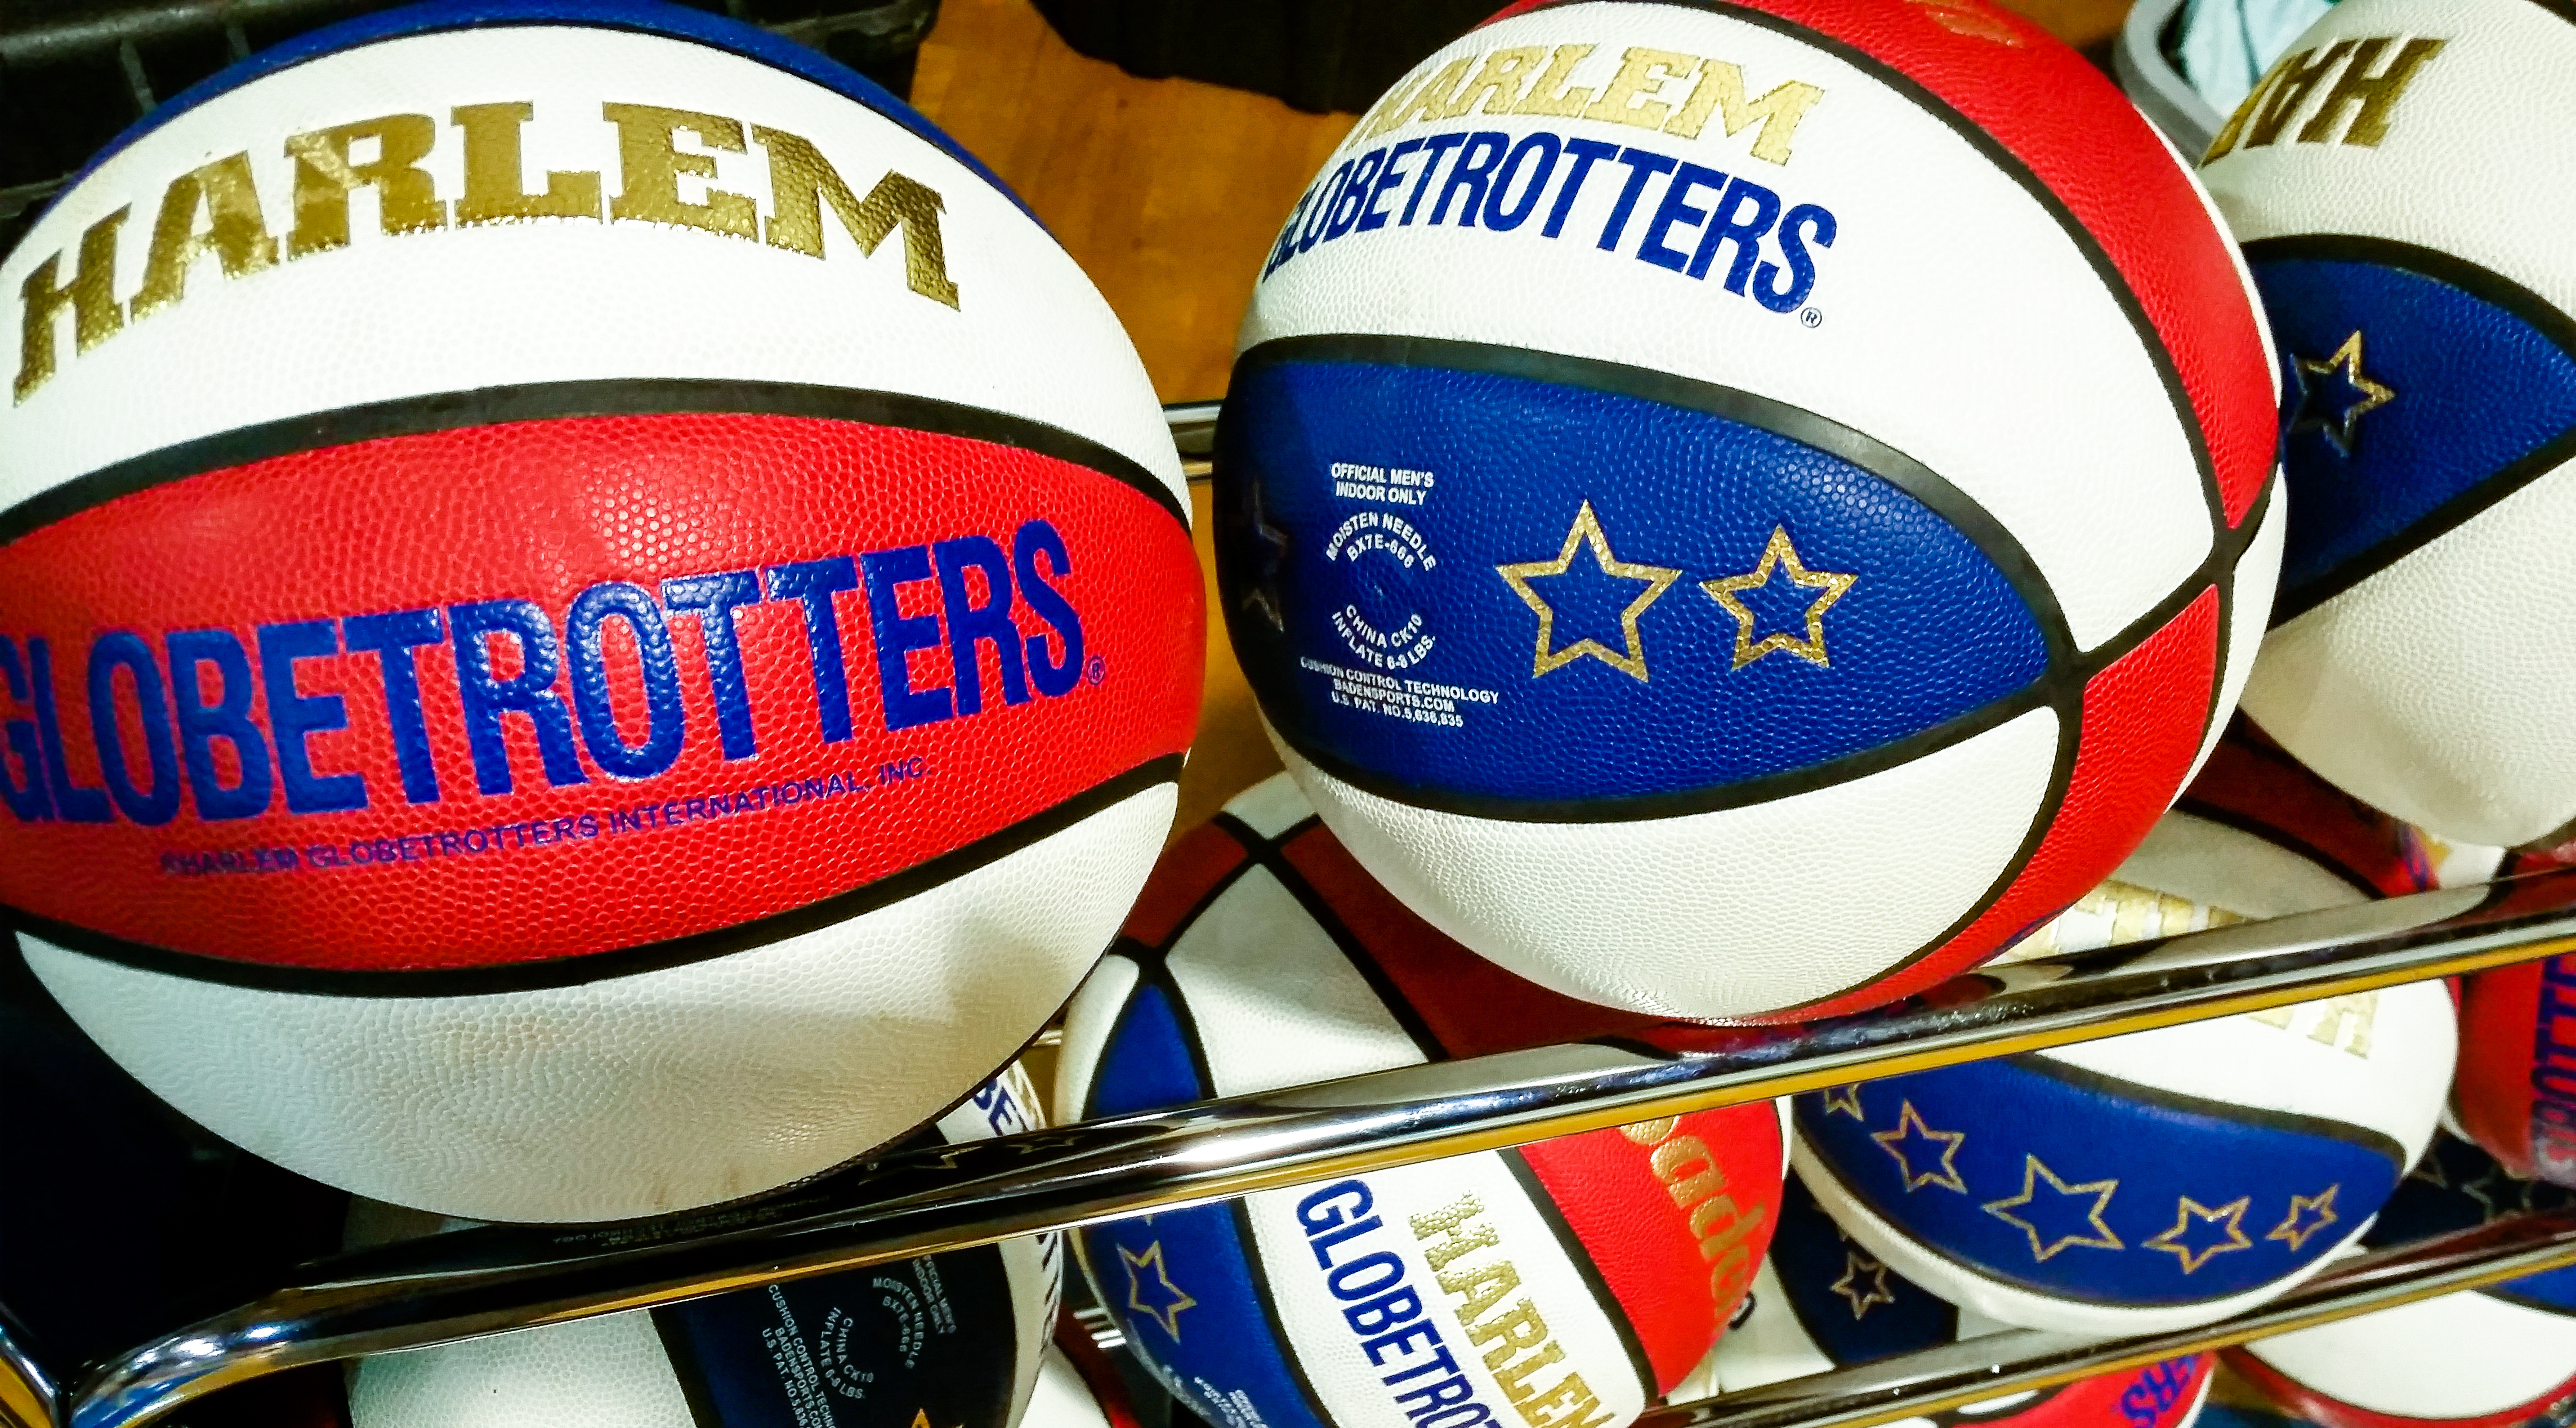 Auto graphed Harlem globetrotters ball - Sports & Outdoors - Kernersville,  North Carolina, Facebook Marketplace